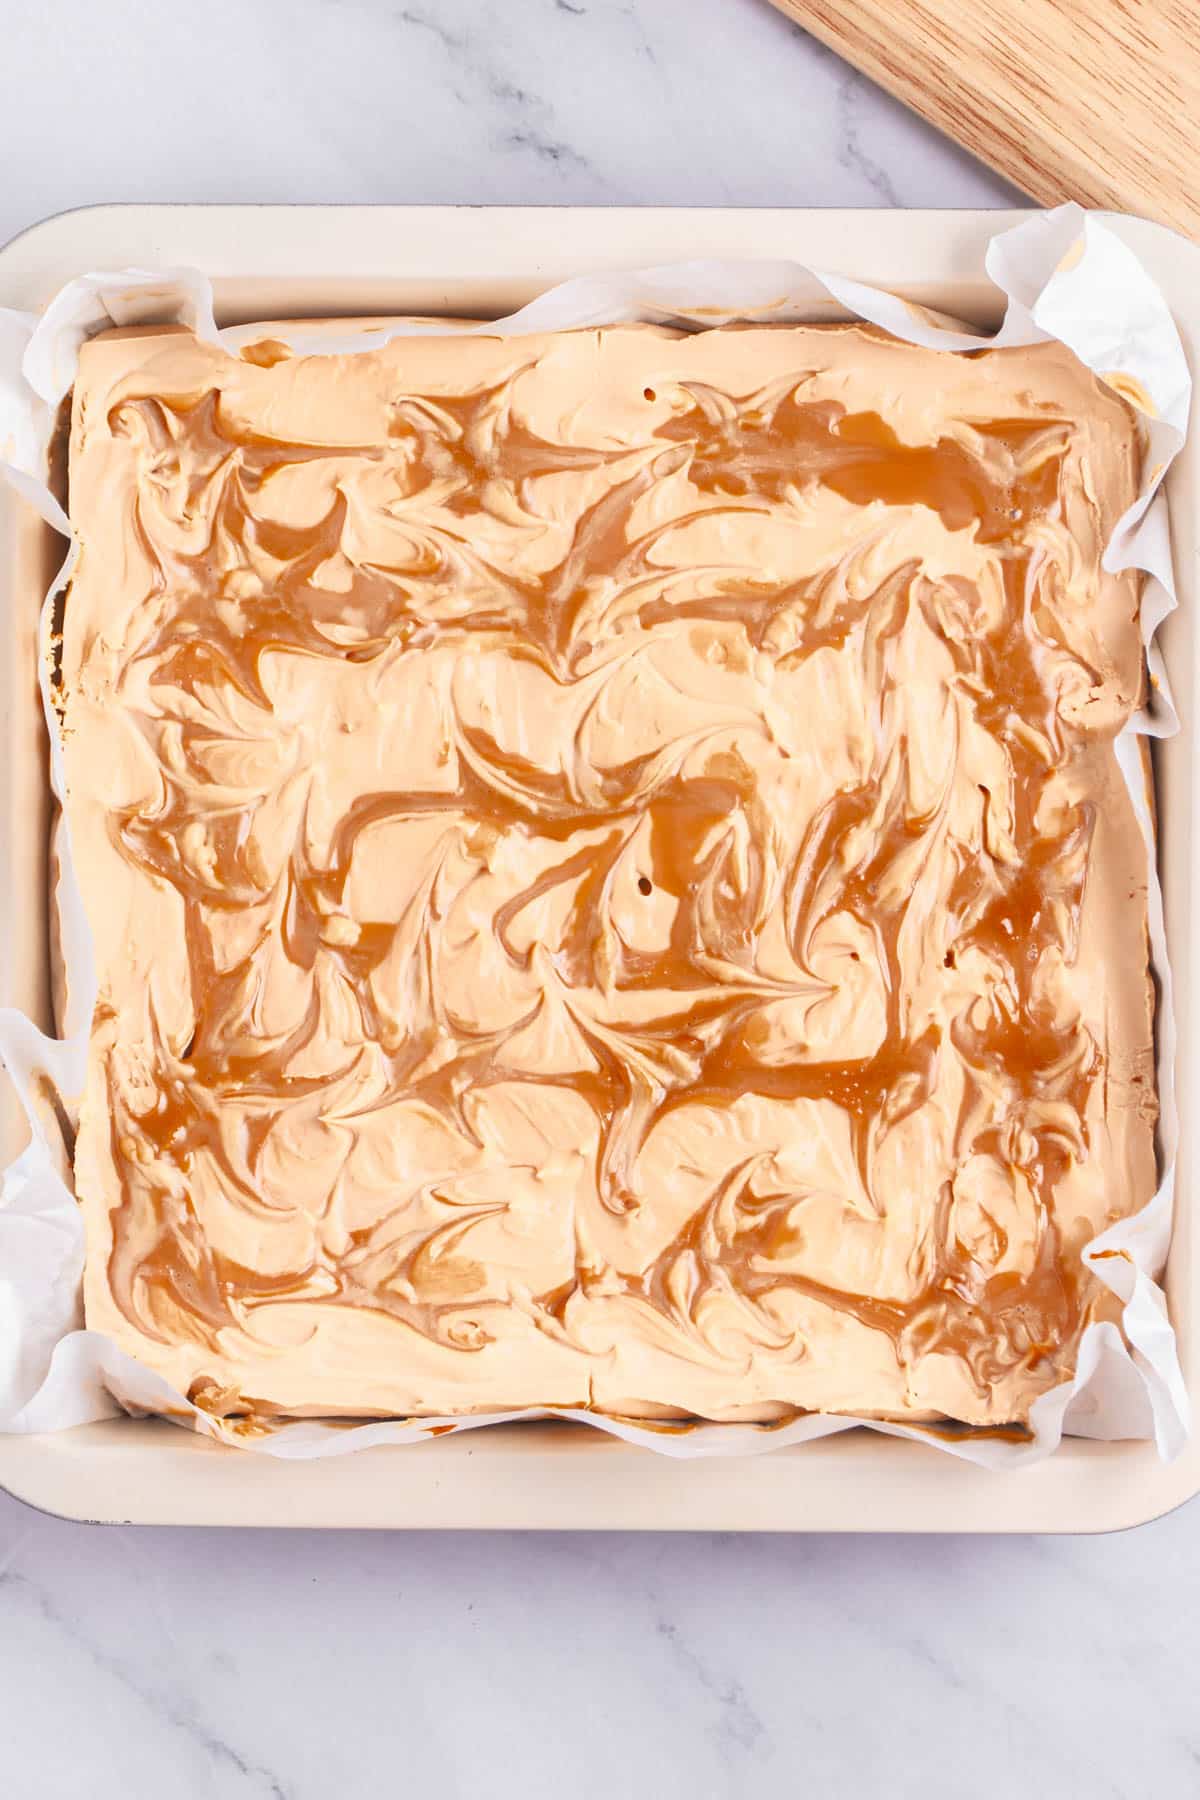 Cheesecake with swirls of dulce de leche.